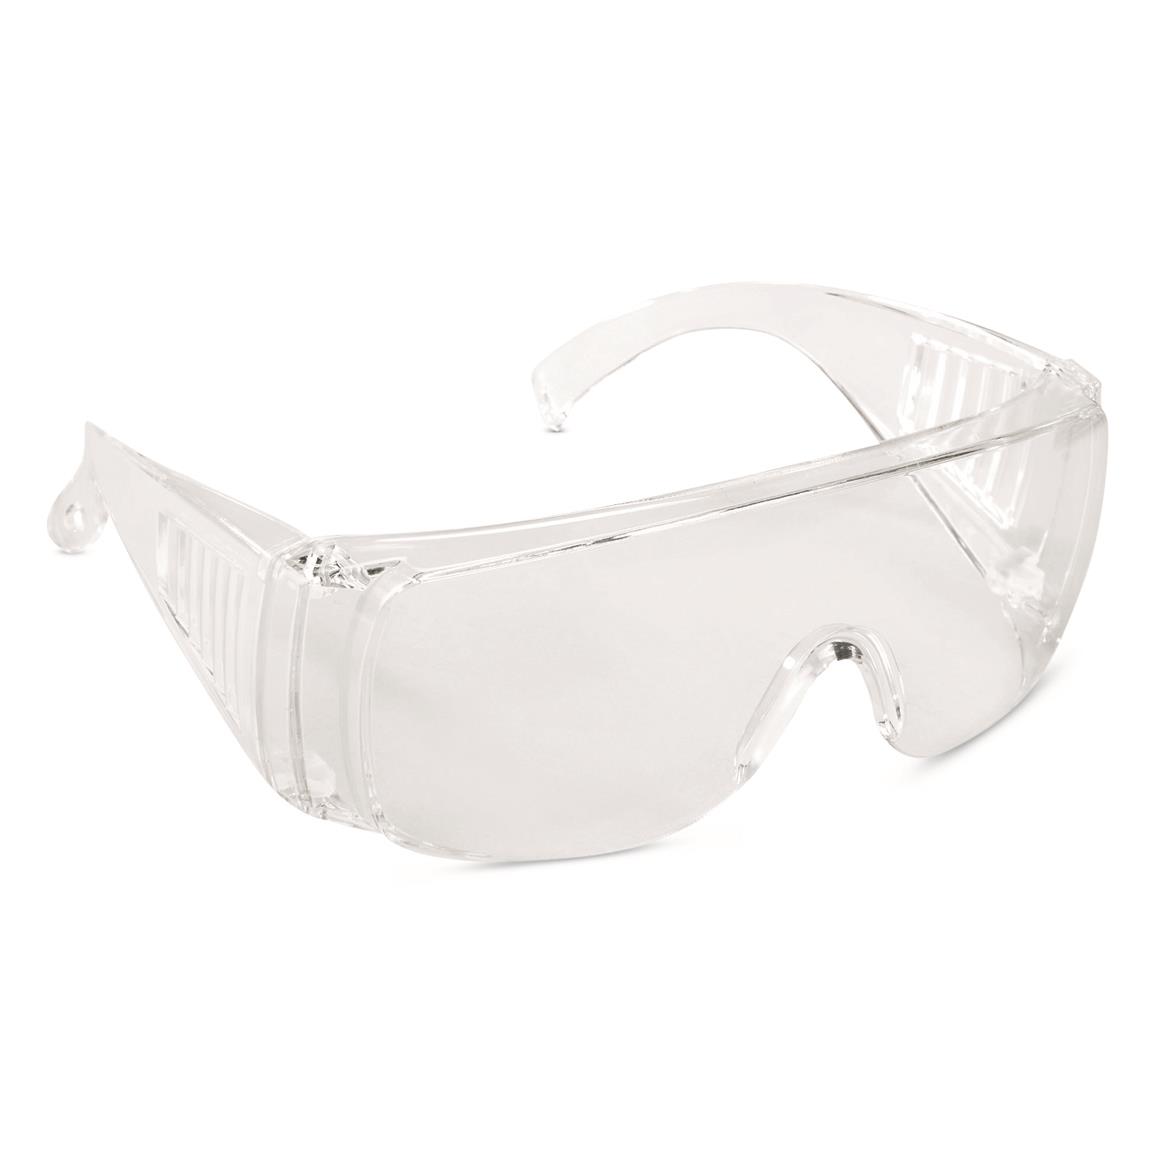 U.S. Municipal Surplus Safety Glasses, 10 Pairs, New